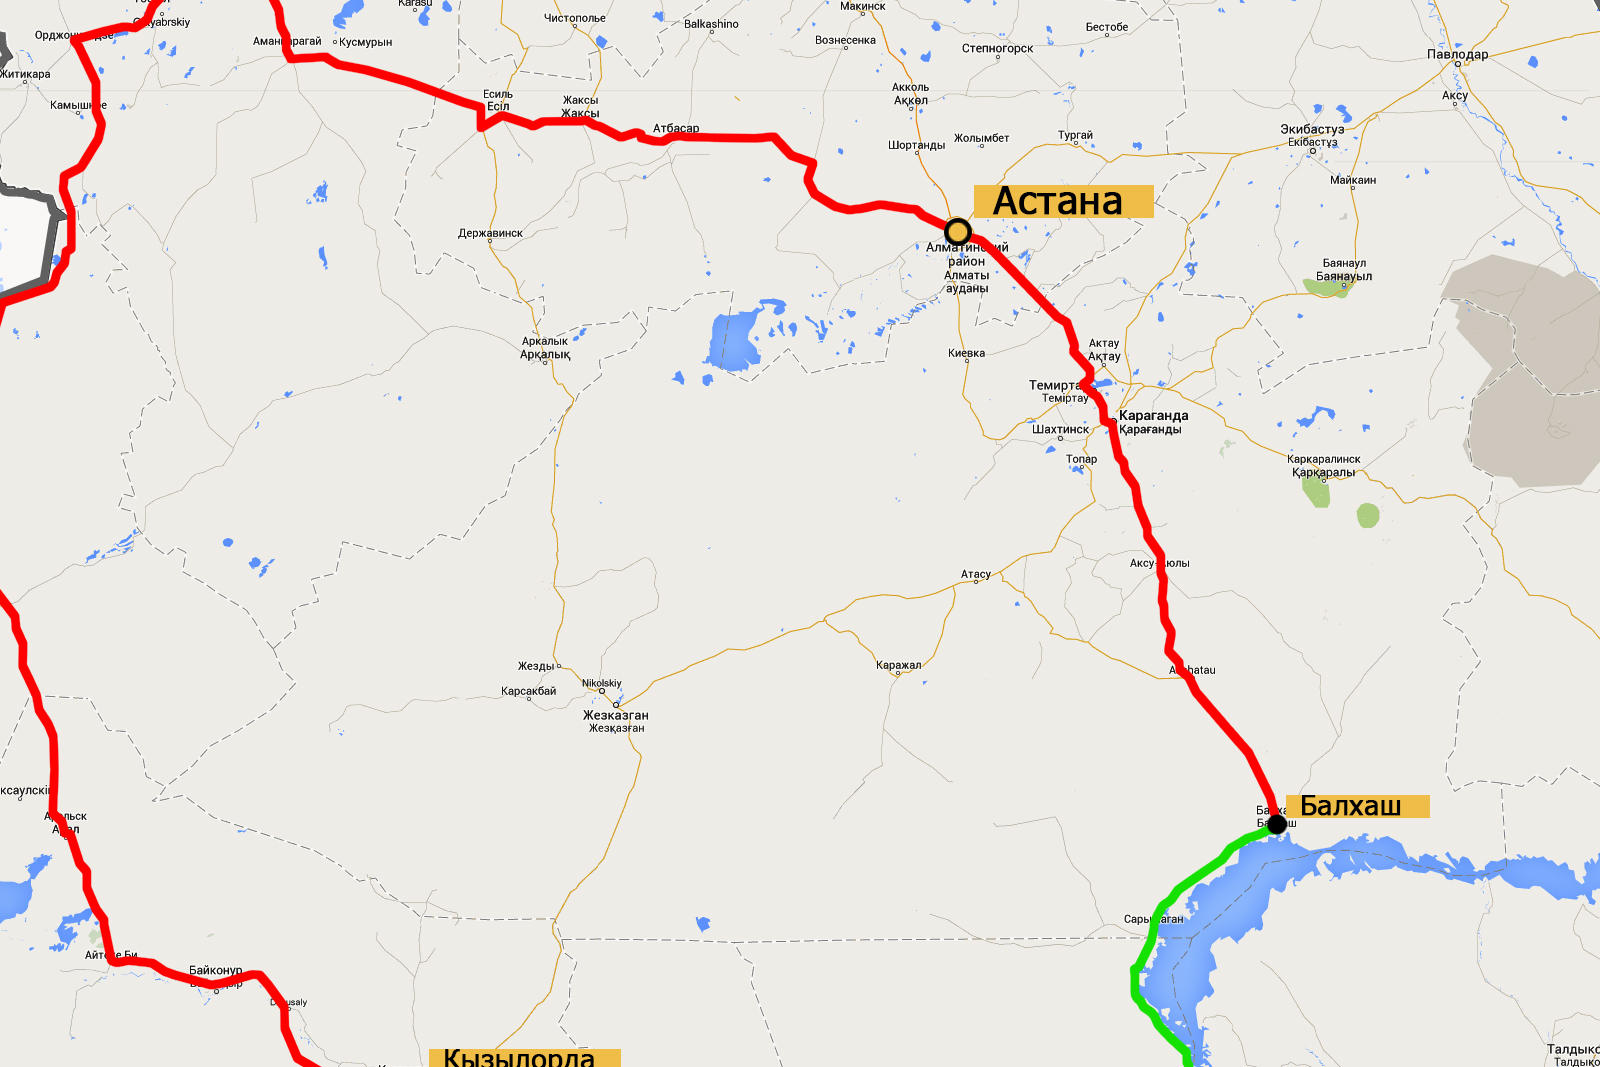 Автомотоэкспедиция: 5 000 км по дорогам Казахстана